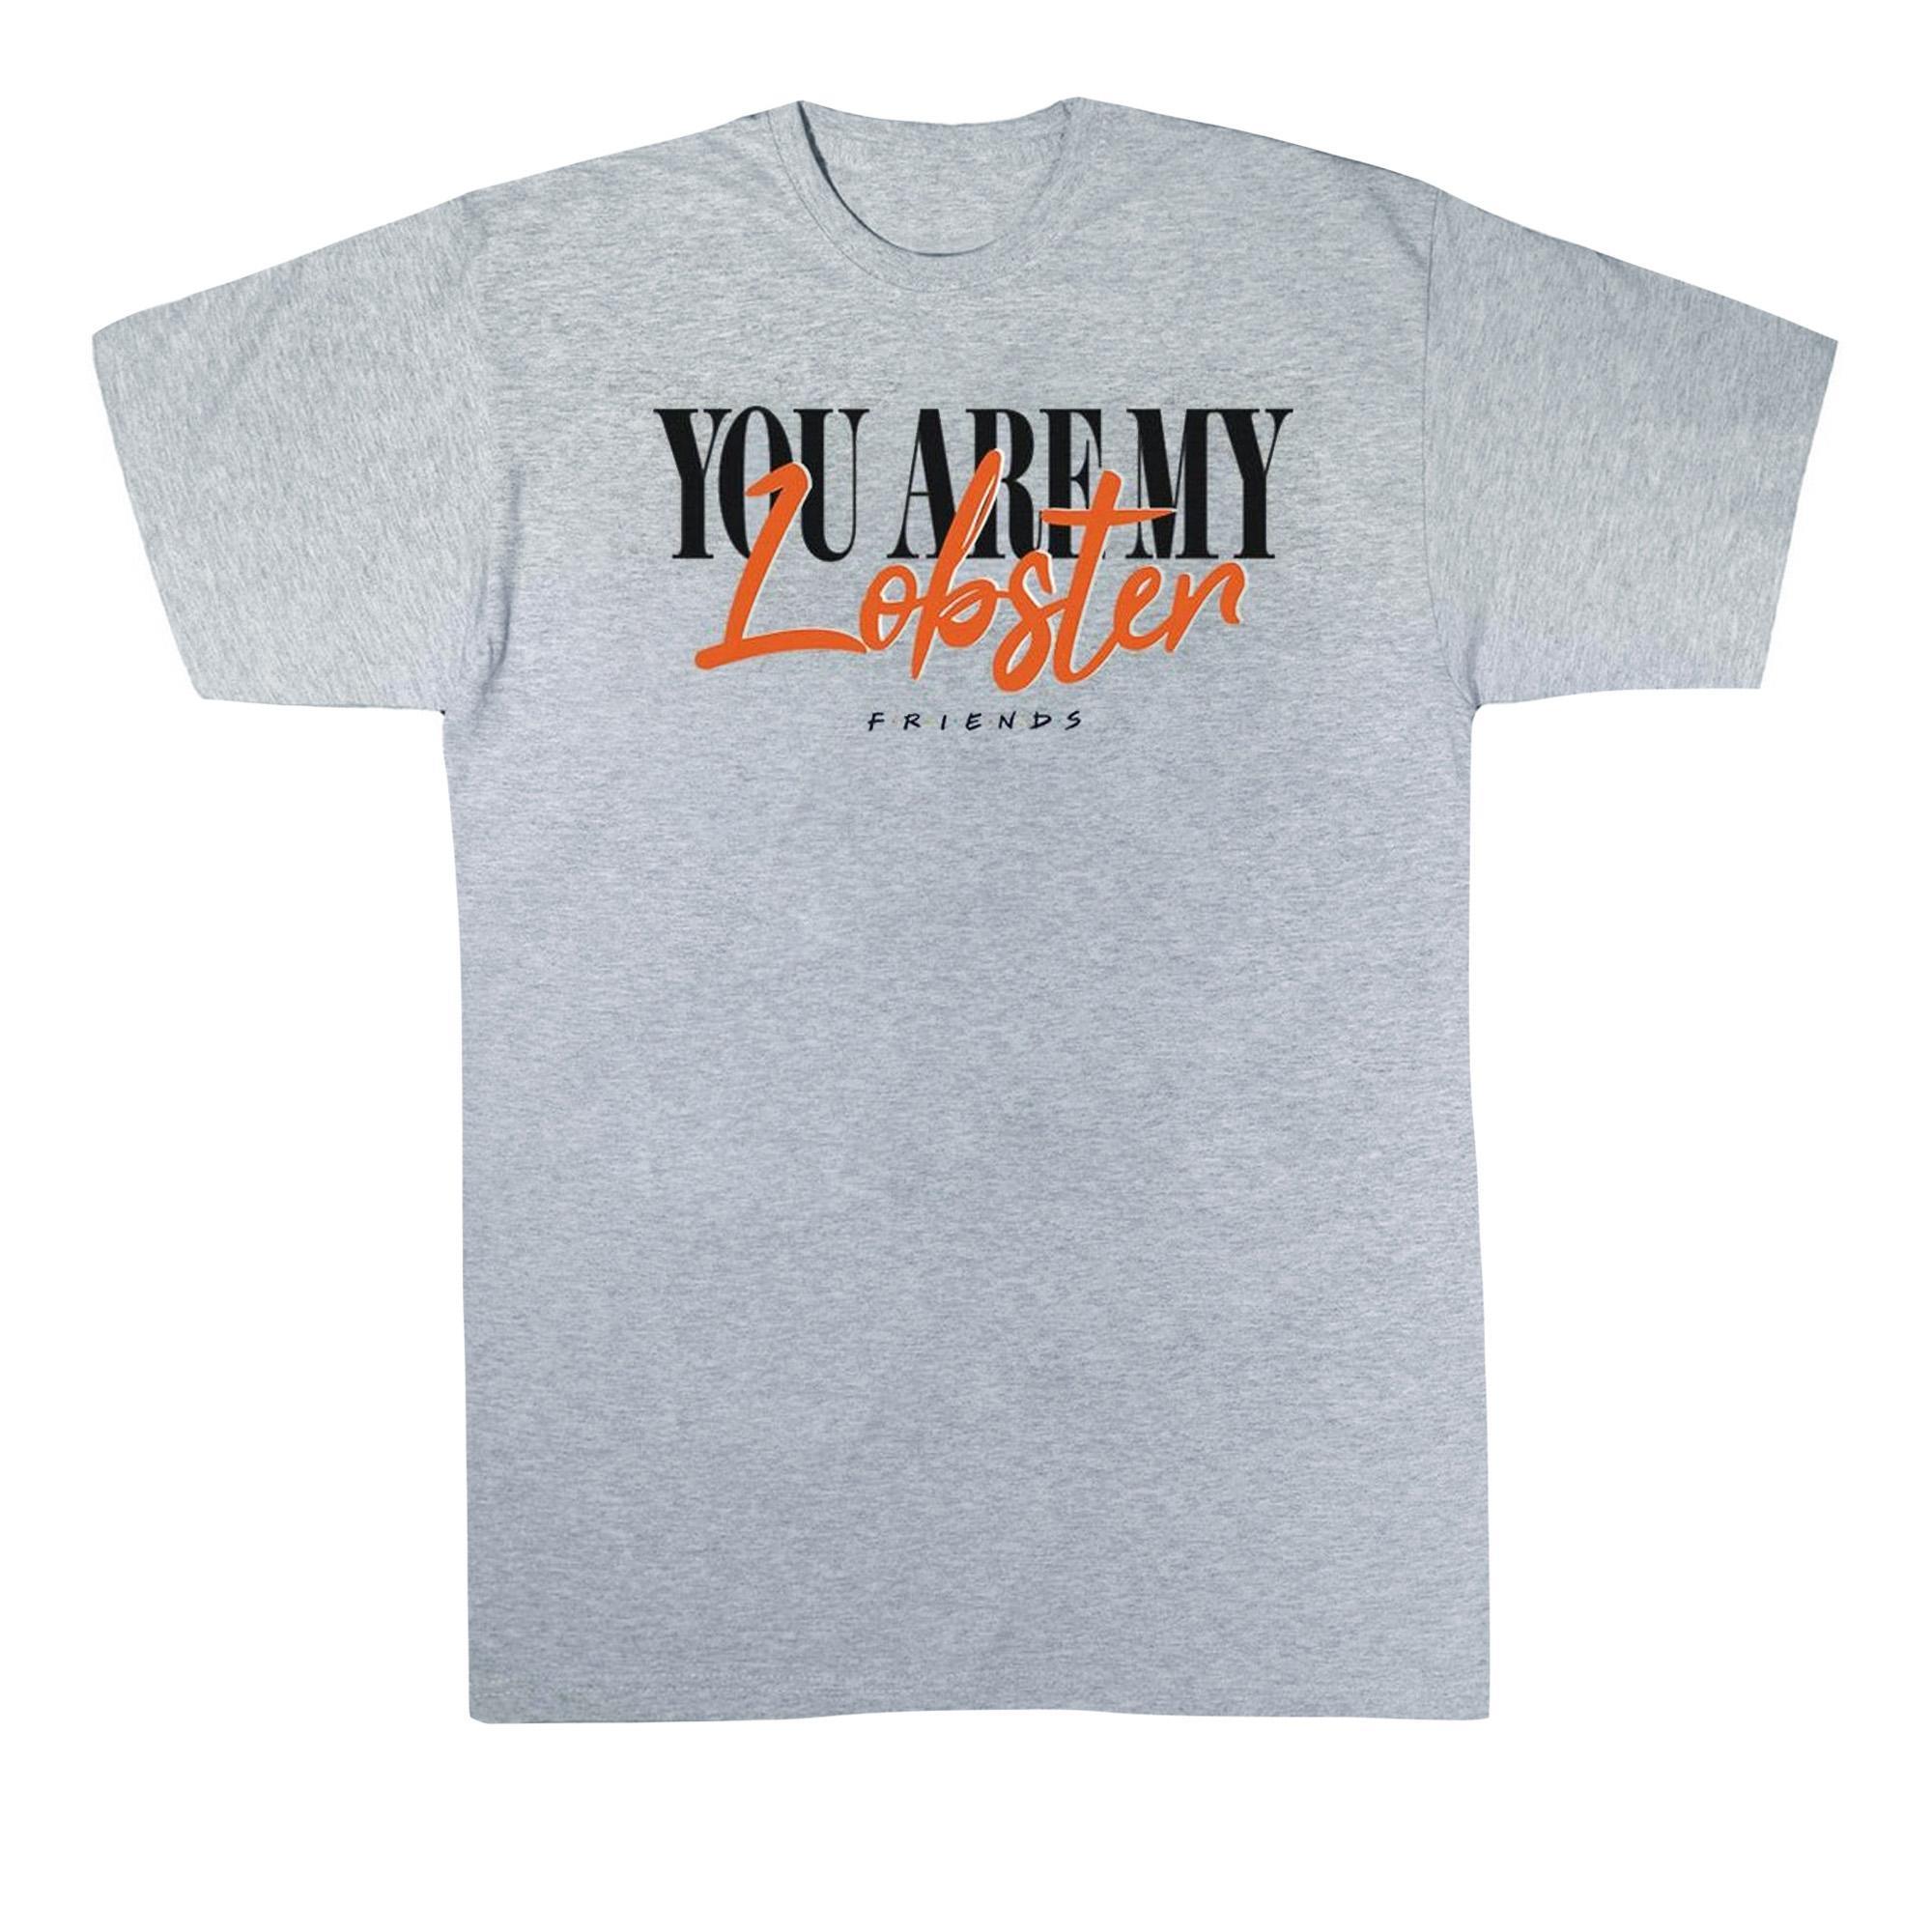 Friends Boys Lobster Soul Mates T-Shirt (Sports Grey) (9-11 Years)